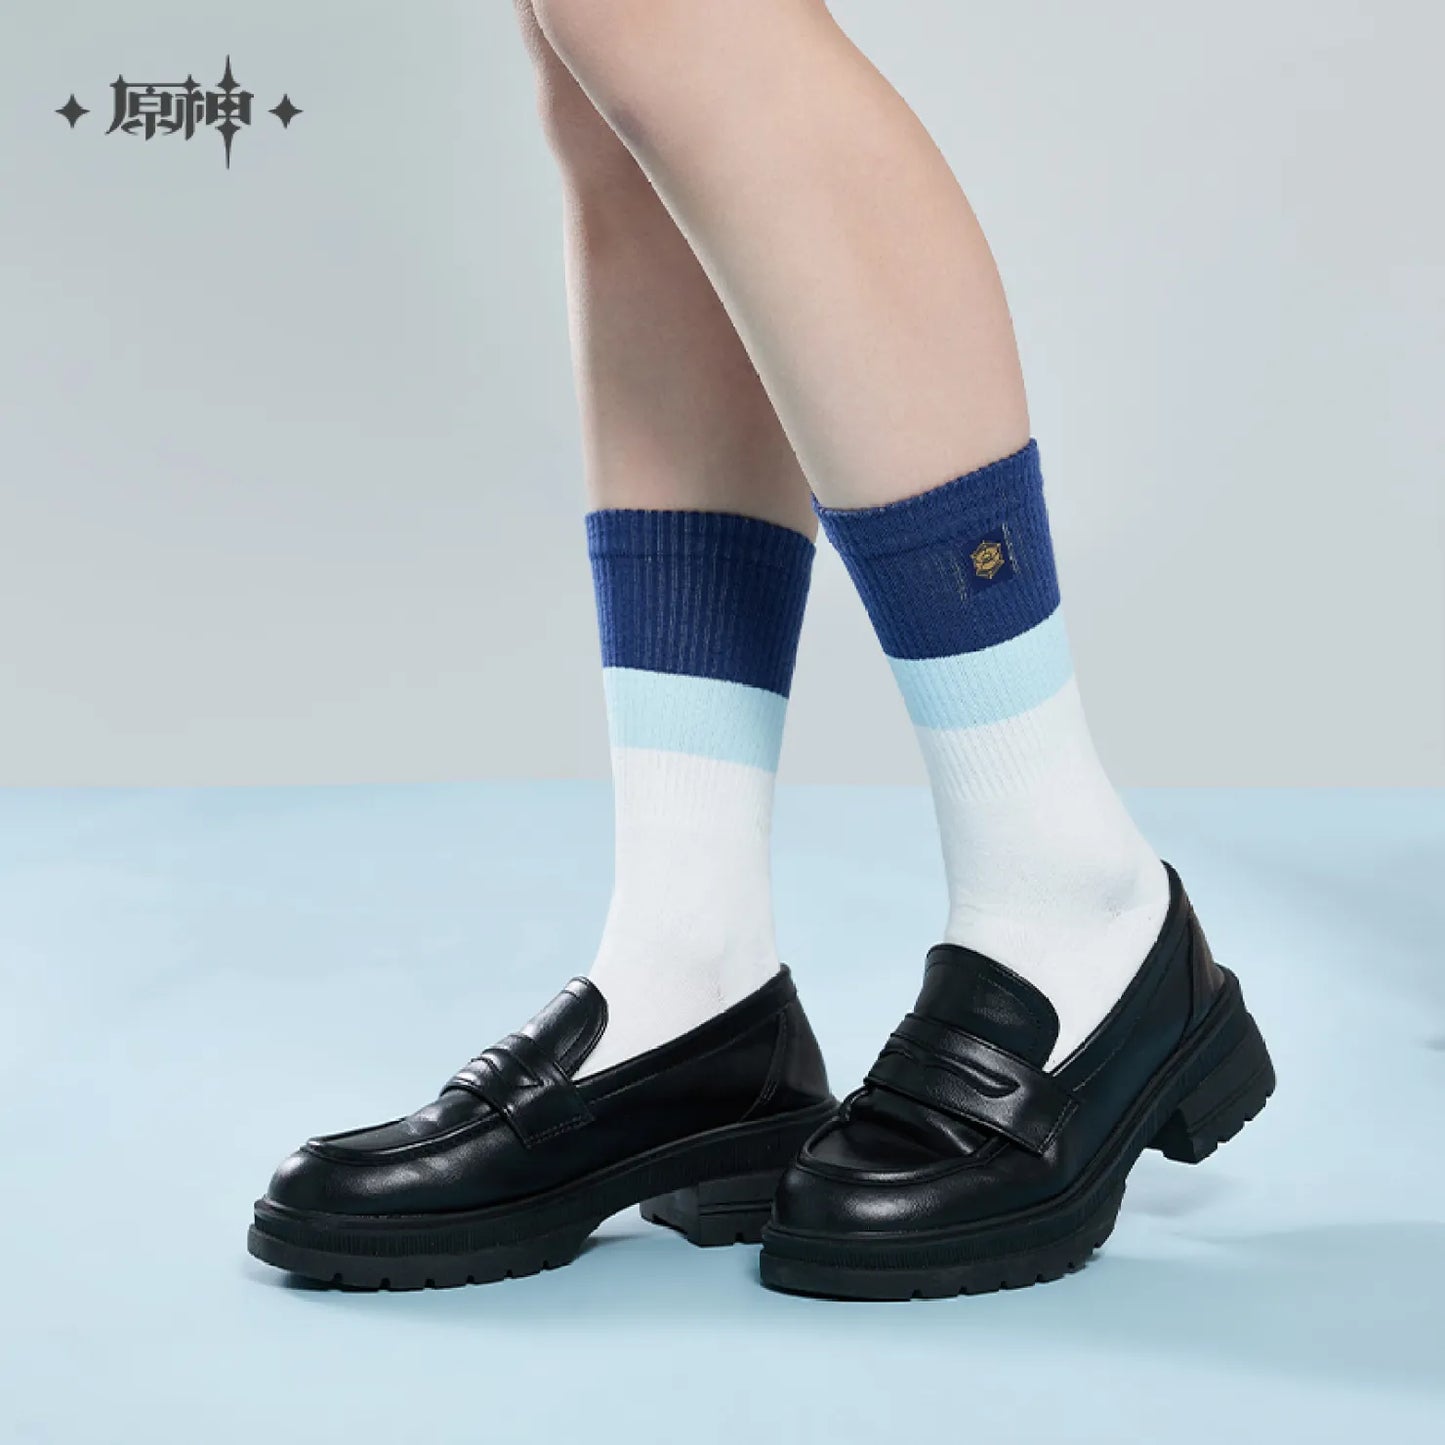 [OFFICIAL MERCHANDISE] Ayaka Theme Impression Socks 3 Styles